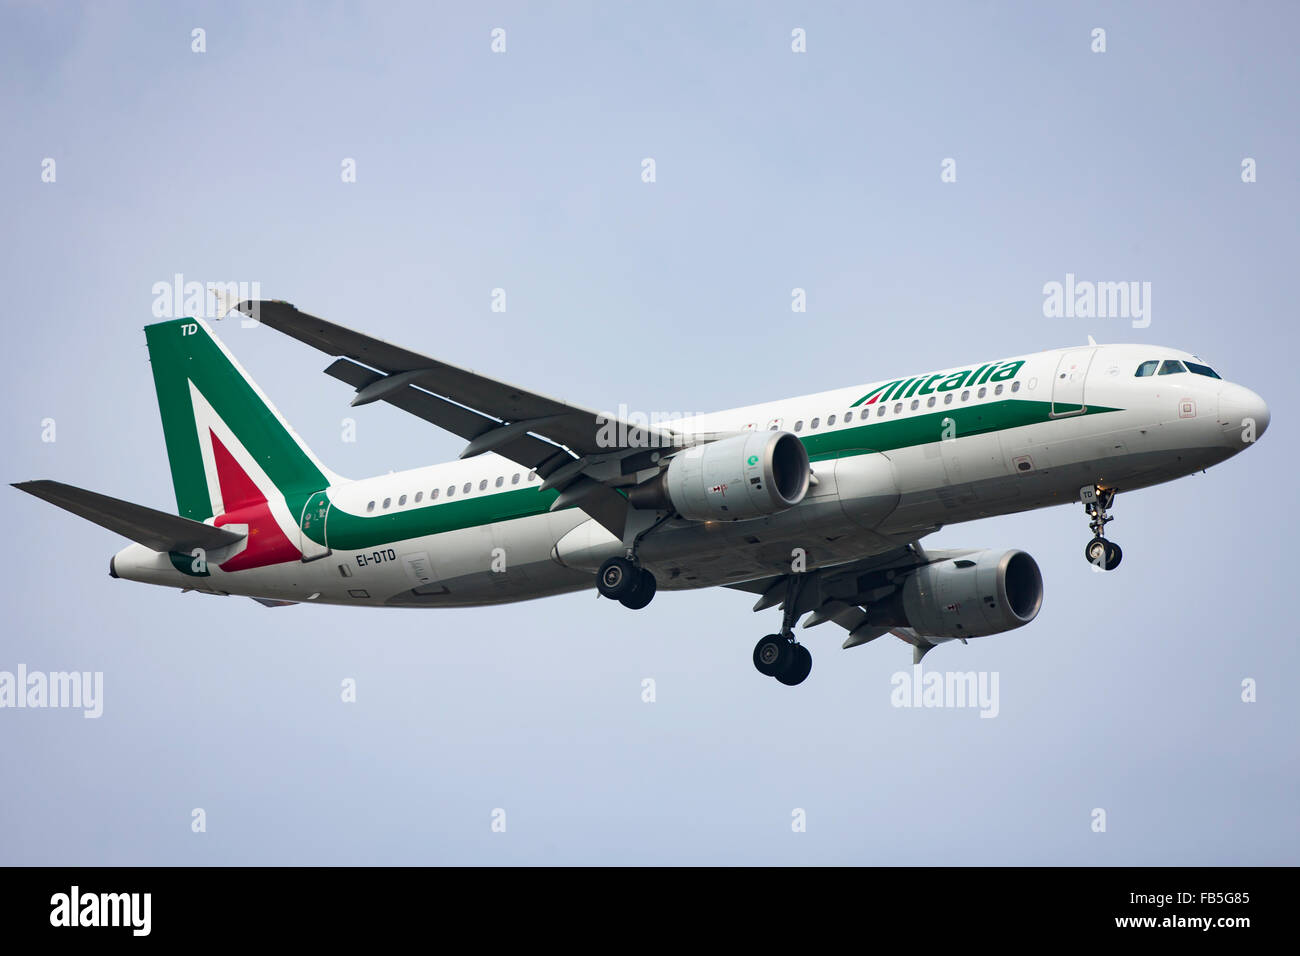 Alitalia Airliner Stock Photo